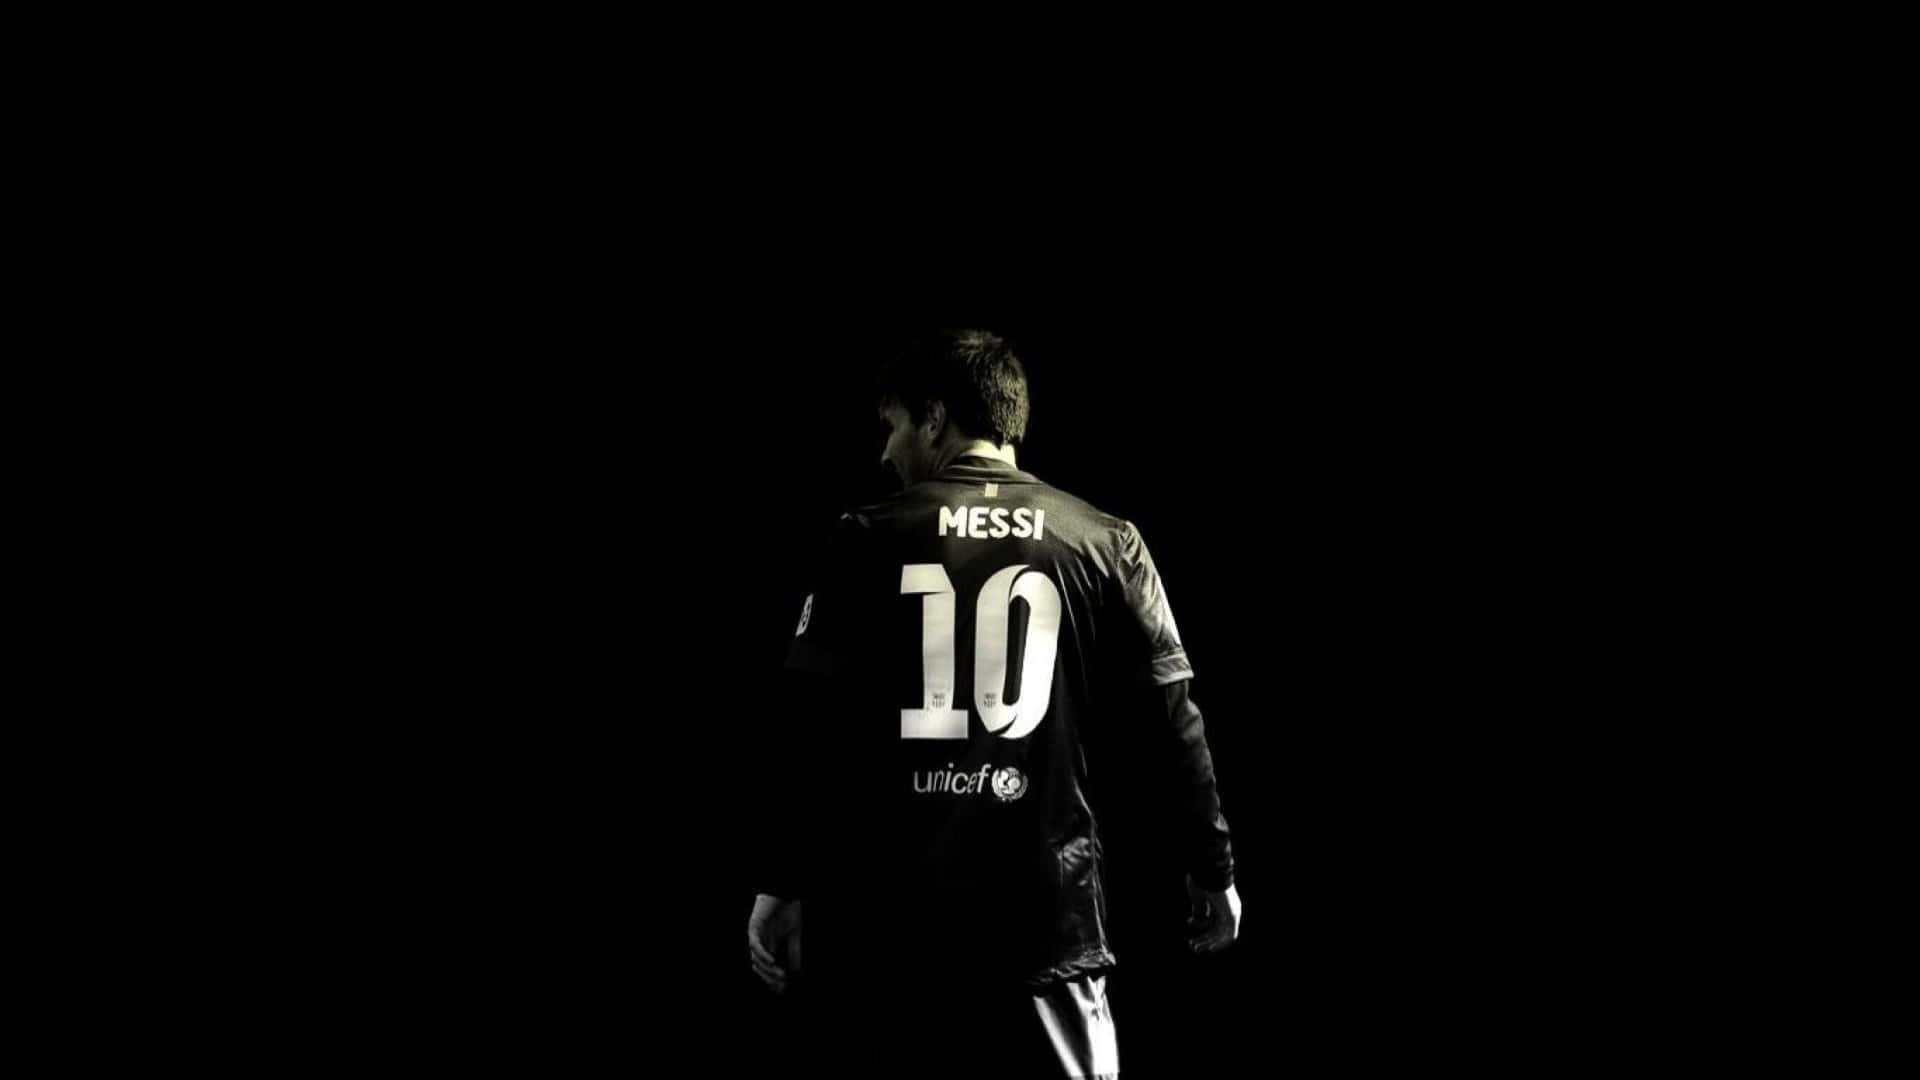 Messi Number10 Dark Background4 K Wallpaper